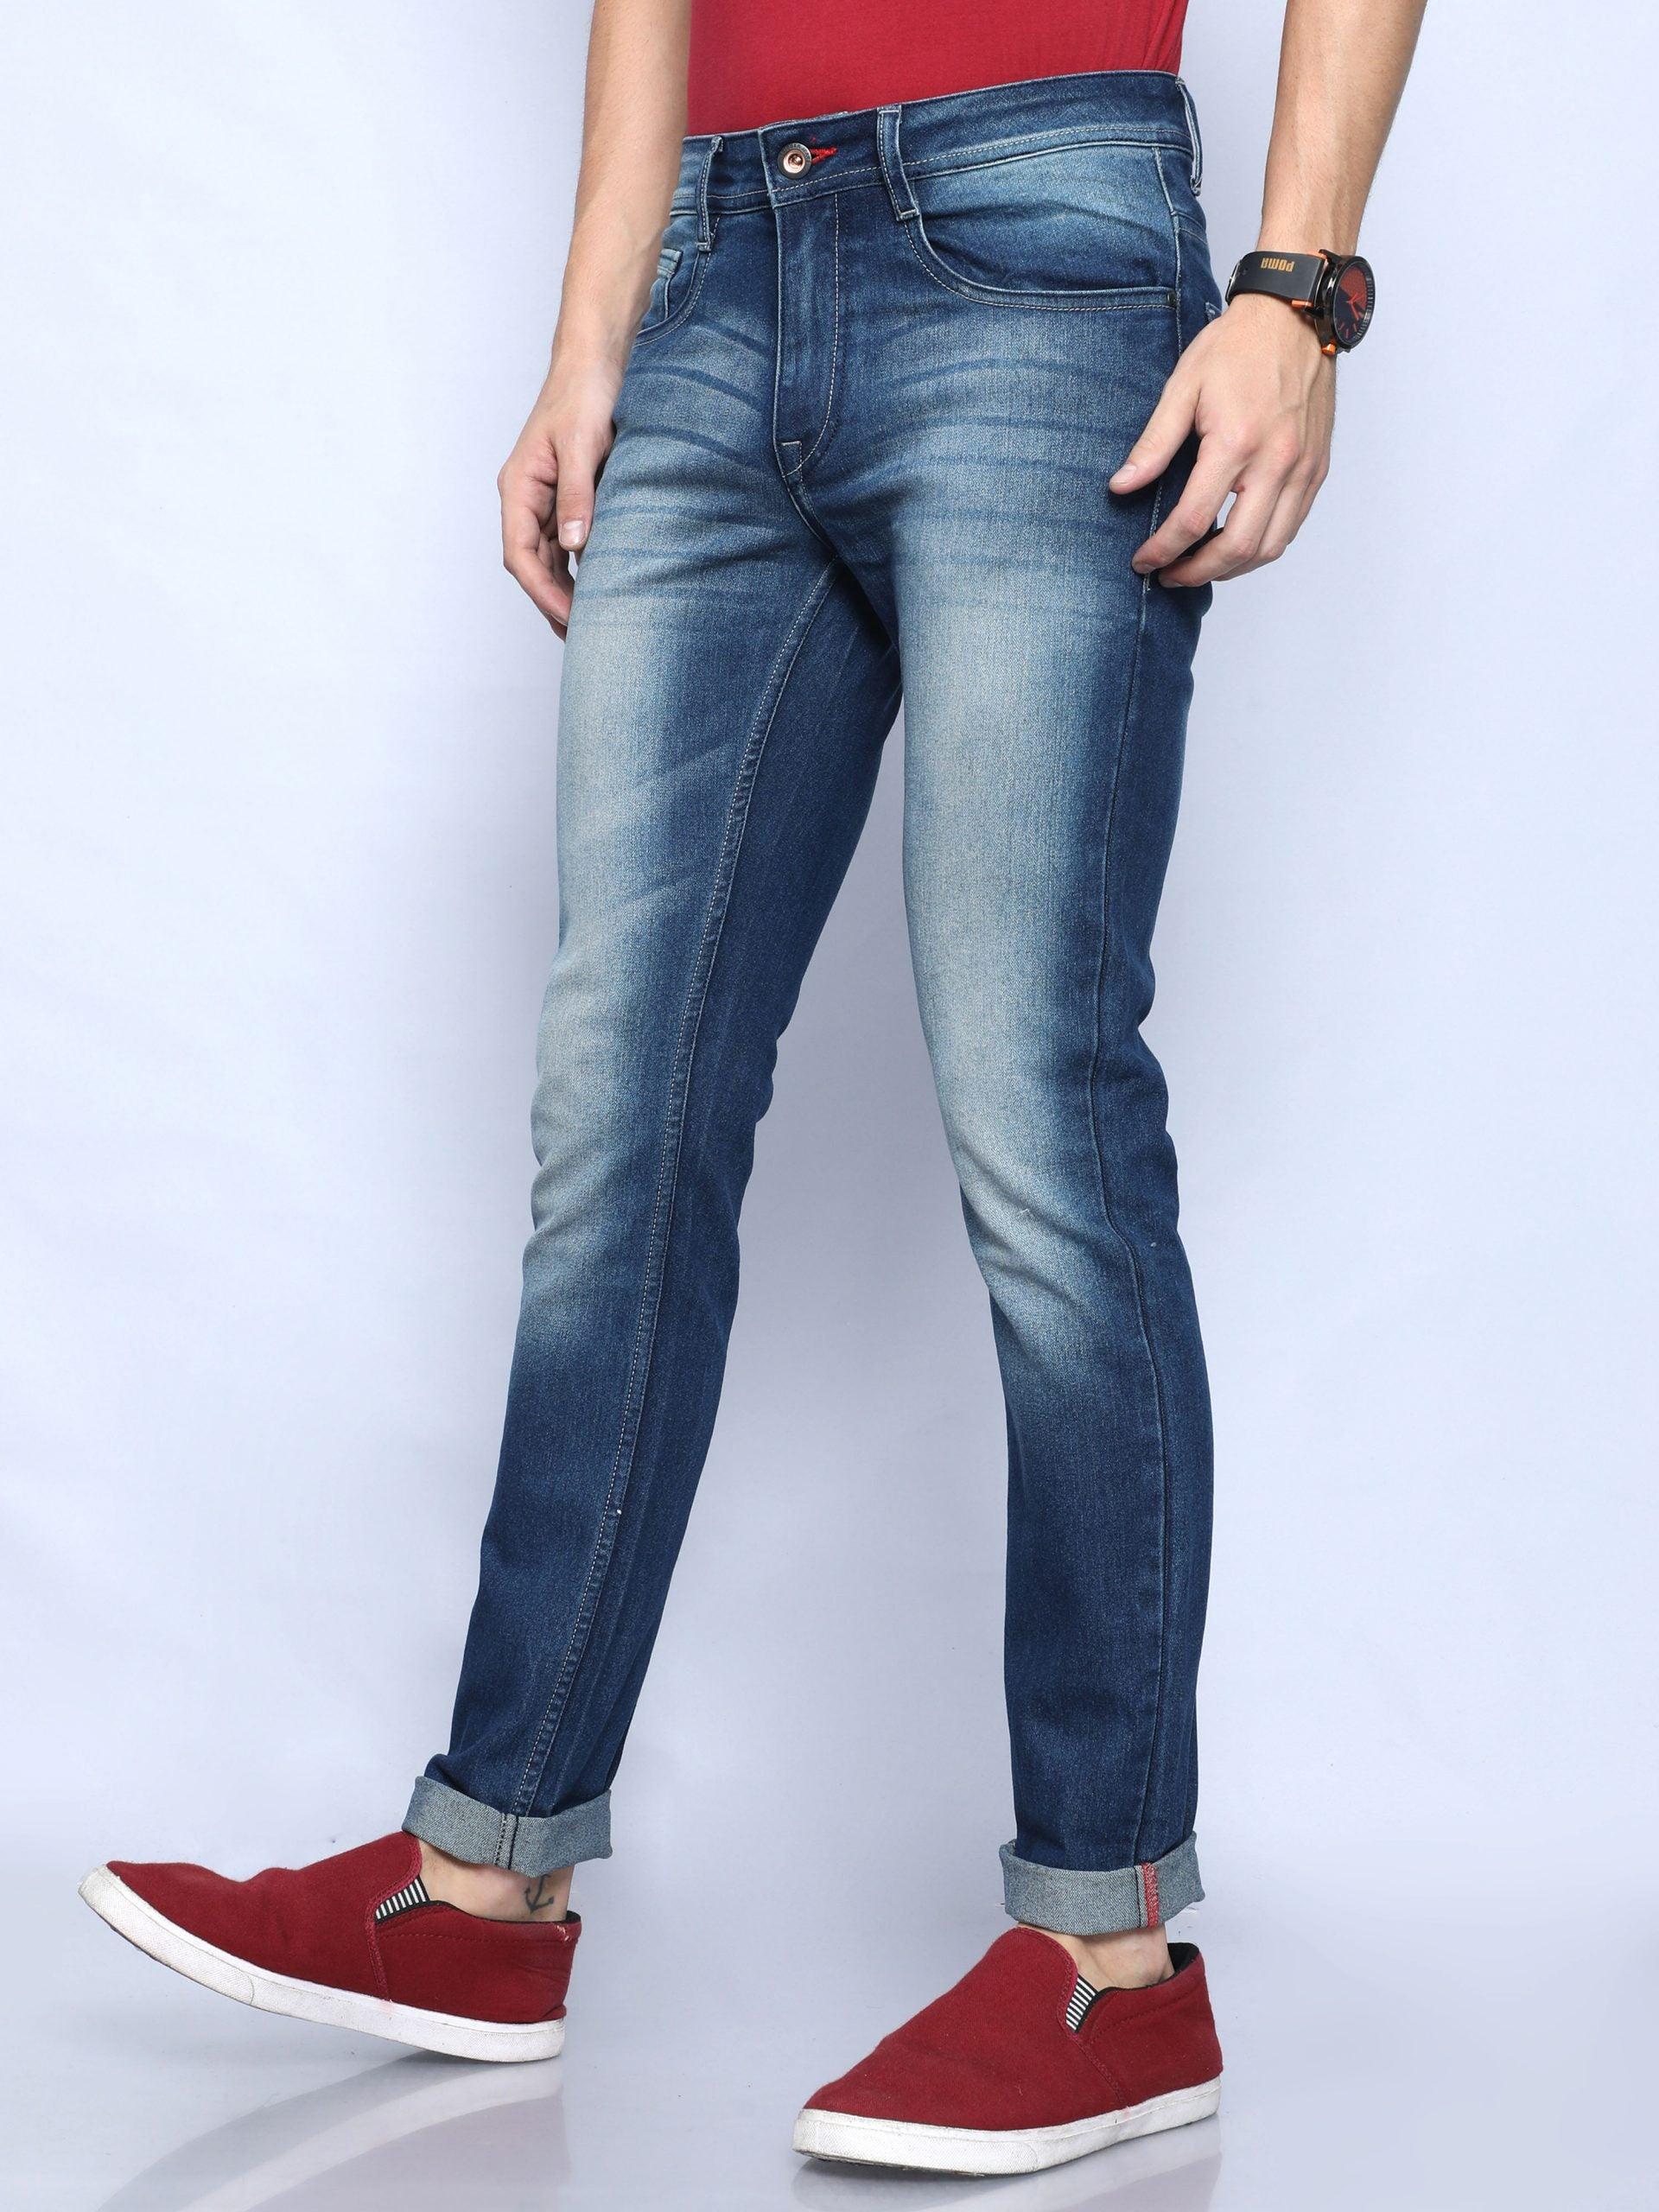 Men's Slim Fit Jeans - Blue 